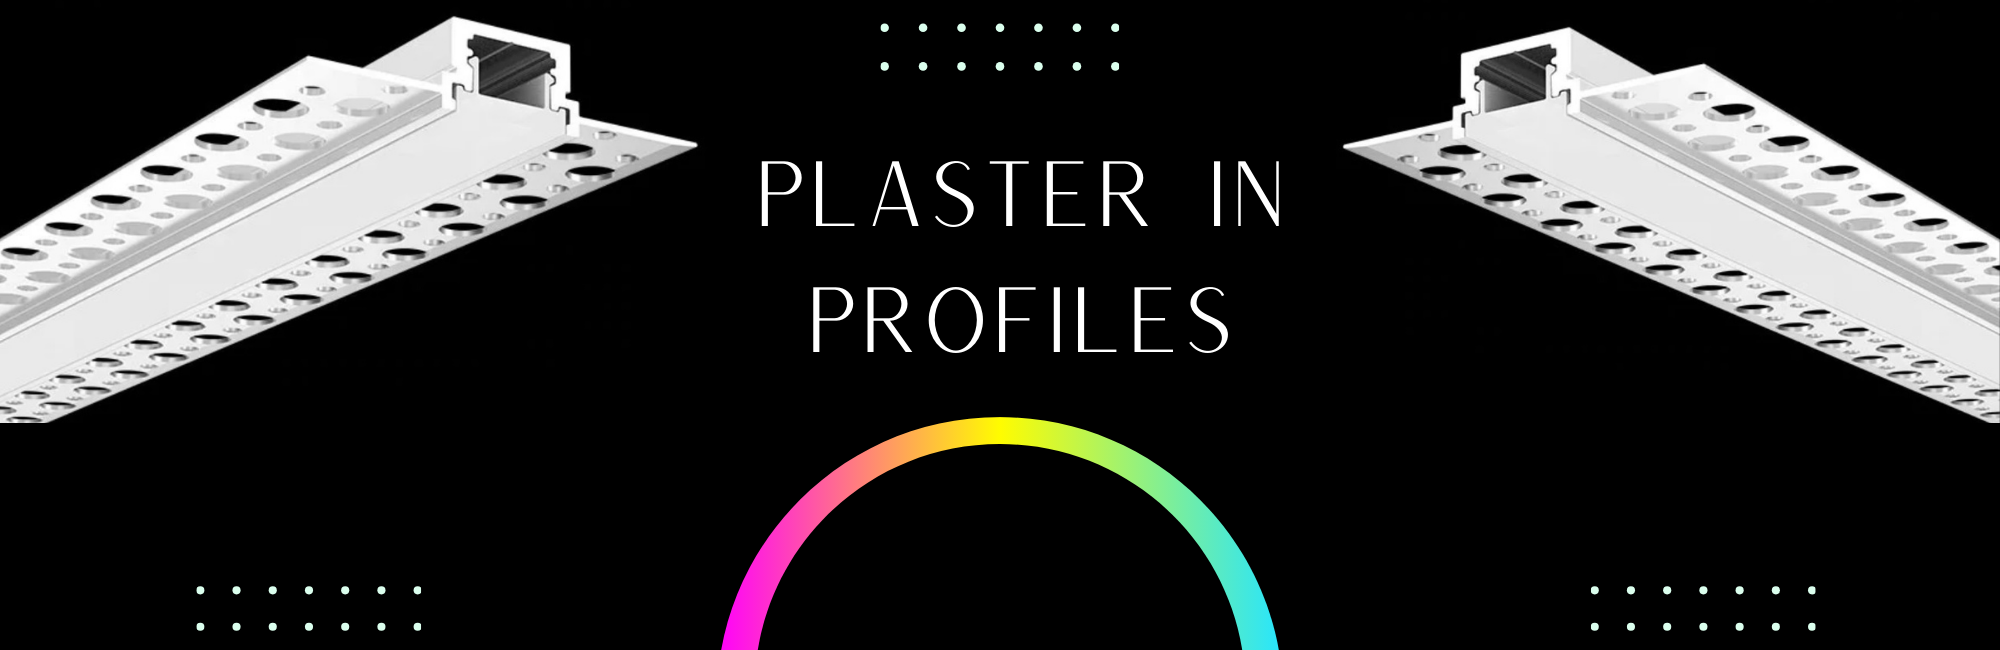 LED plaster in profiles